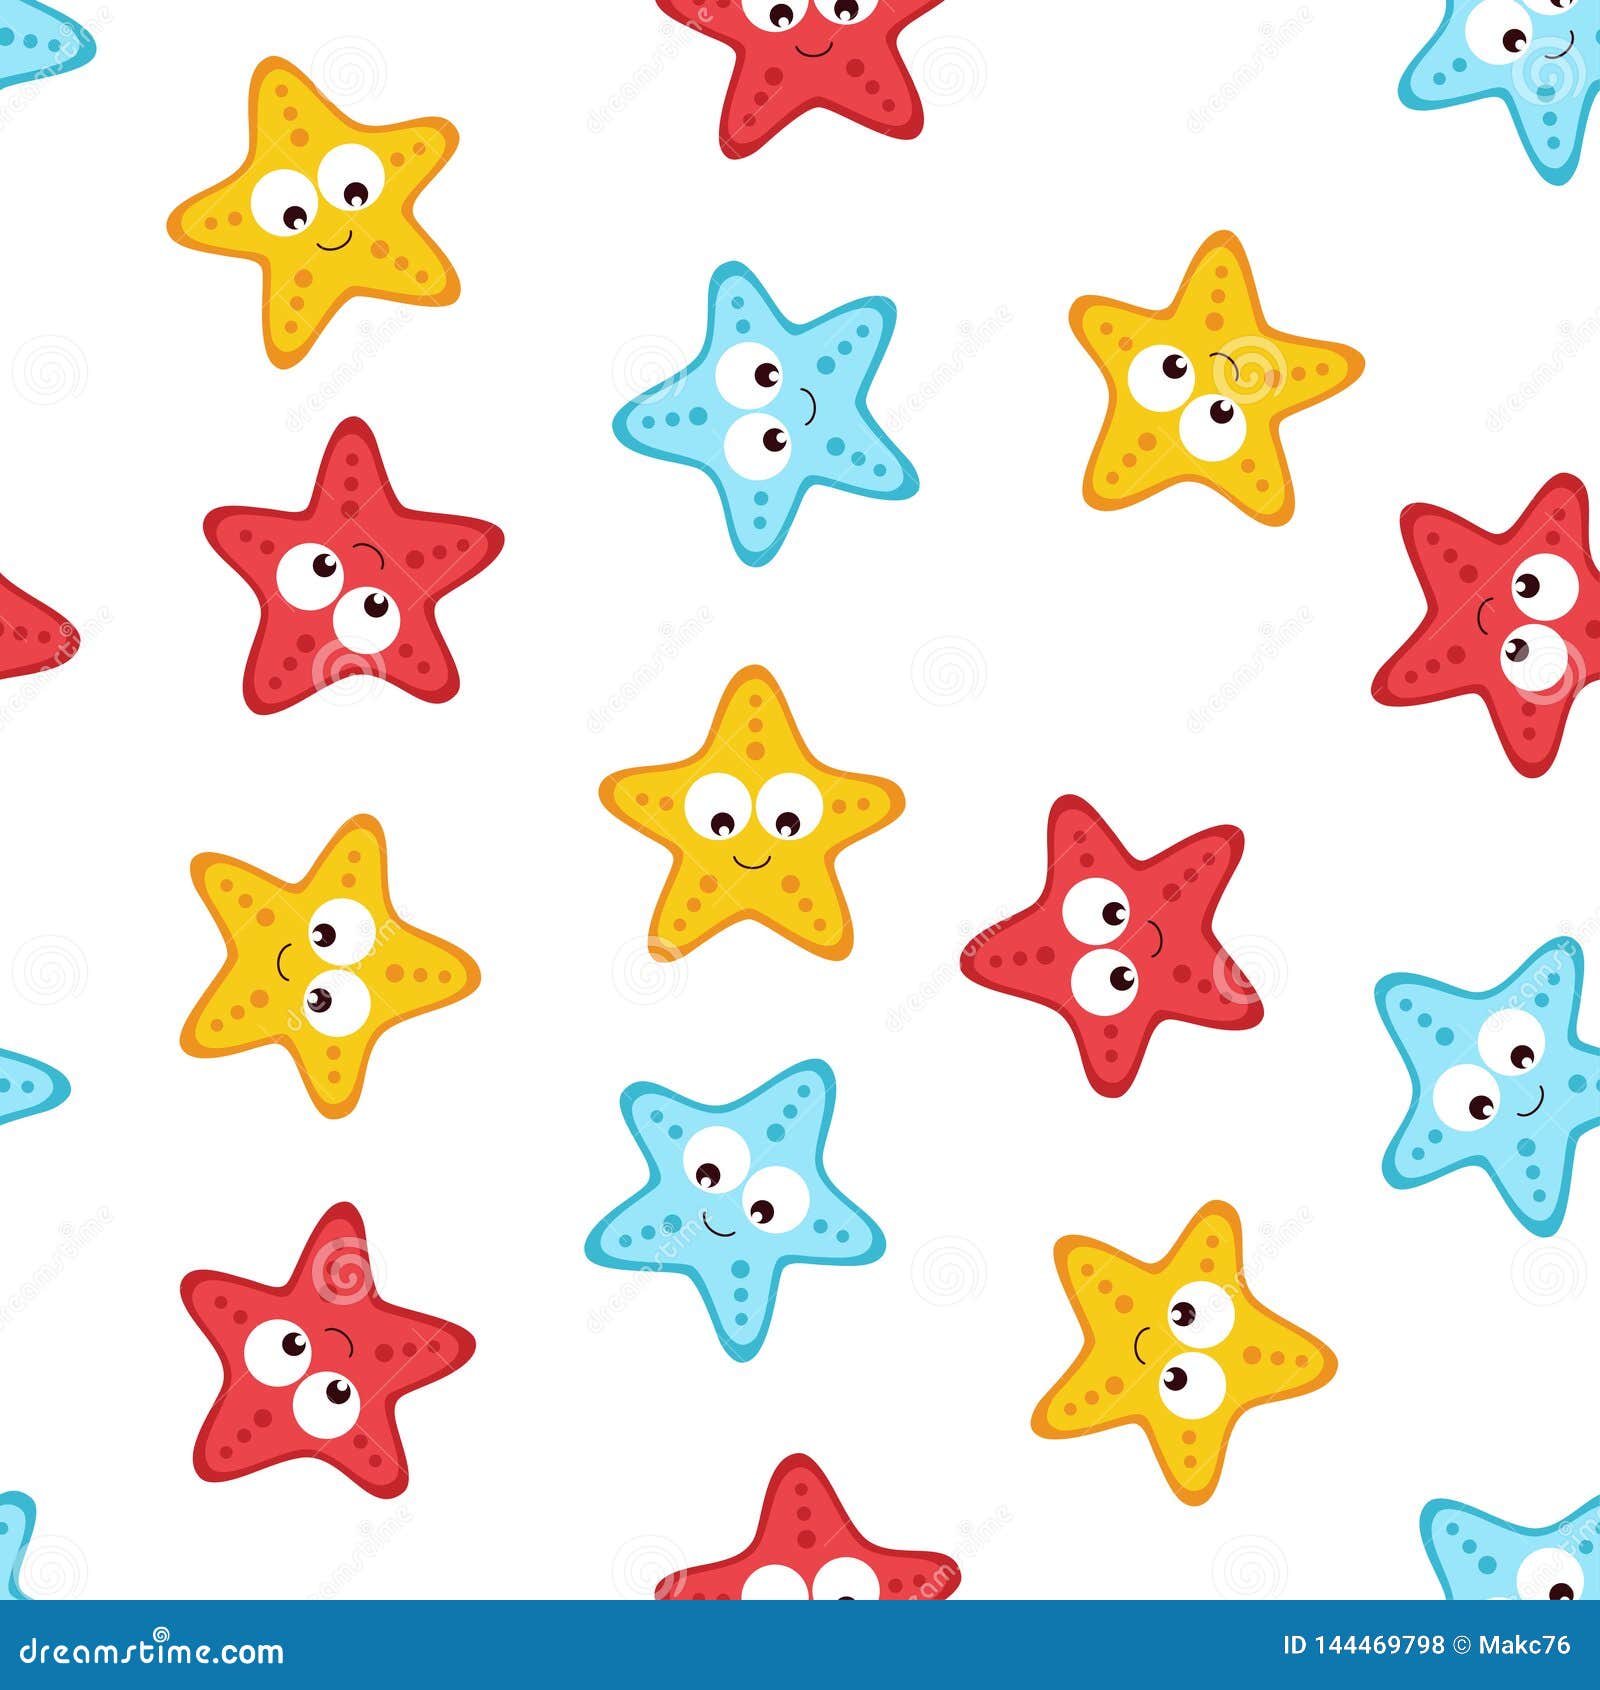 Starfish Background 52 images